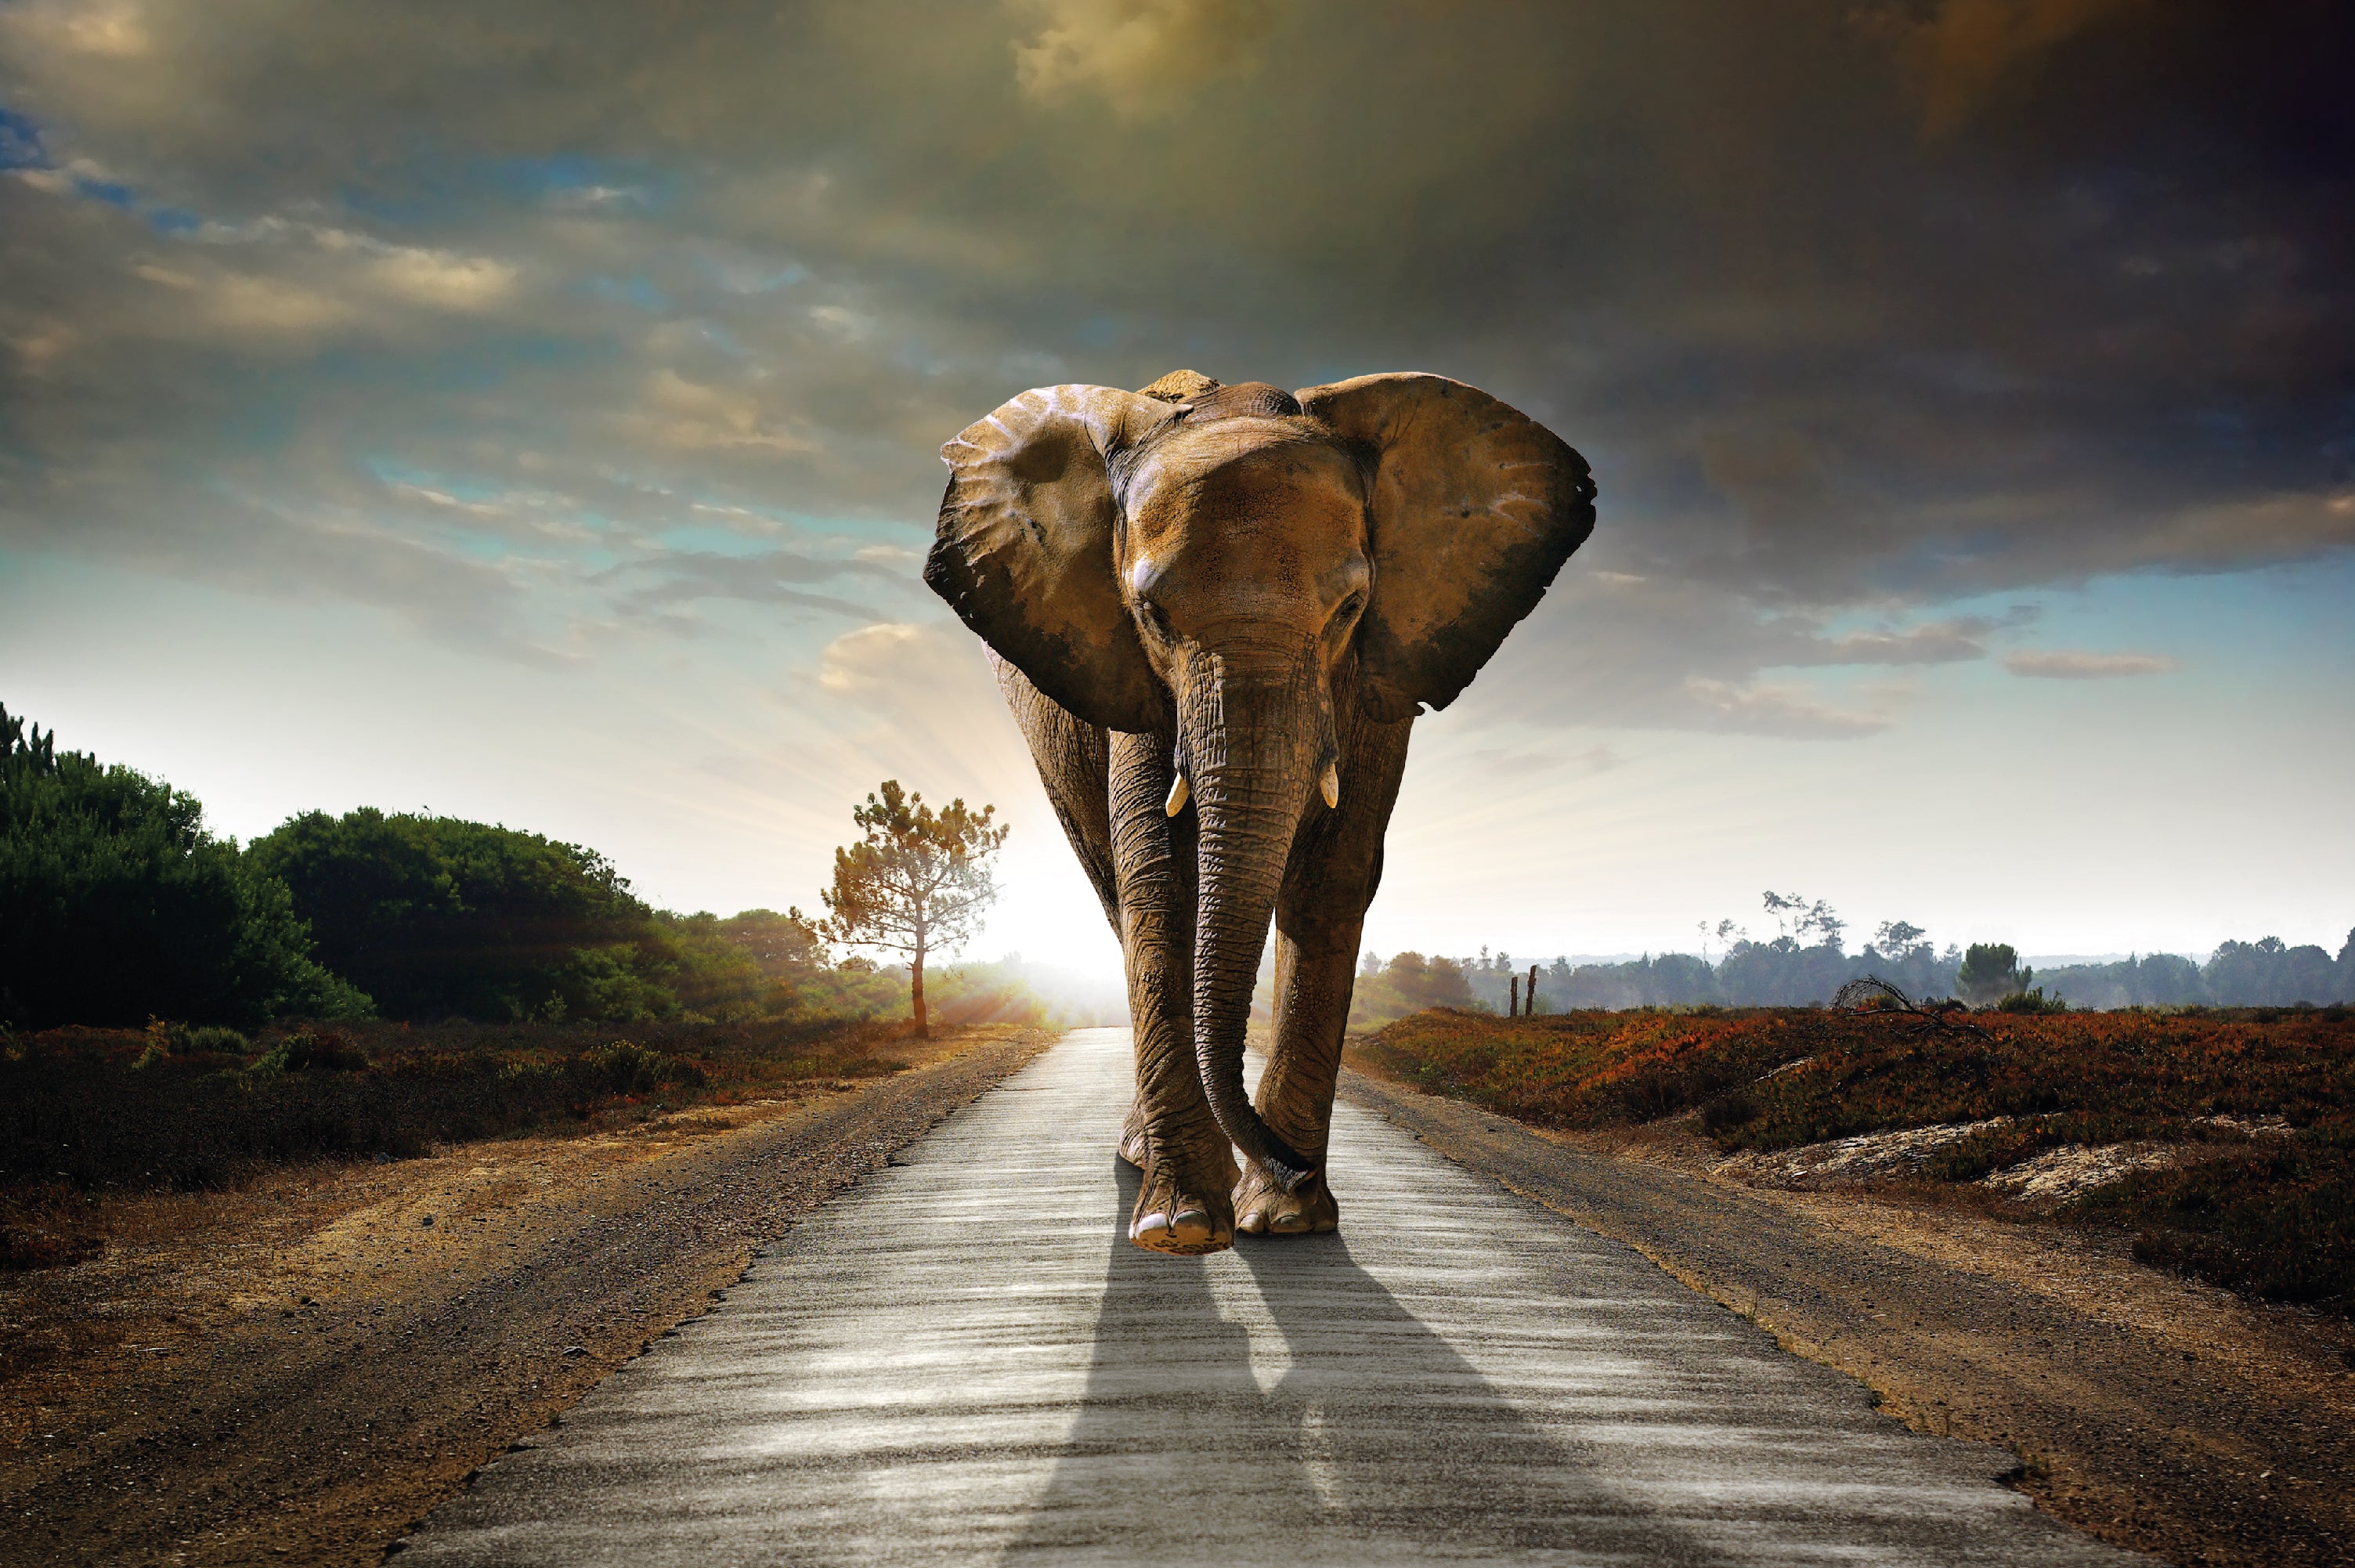 ELEPHANT ON ROAD